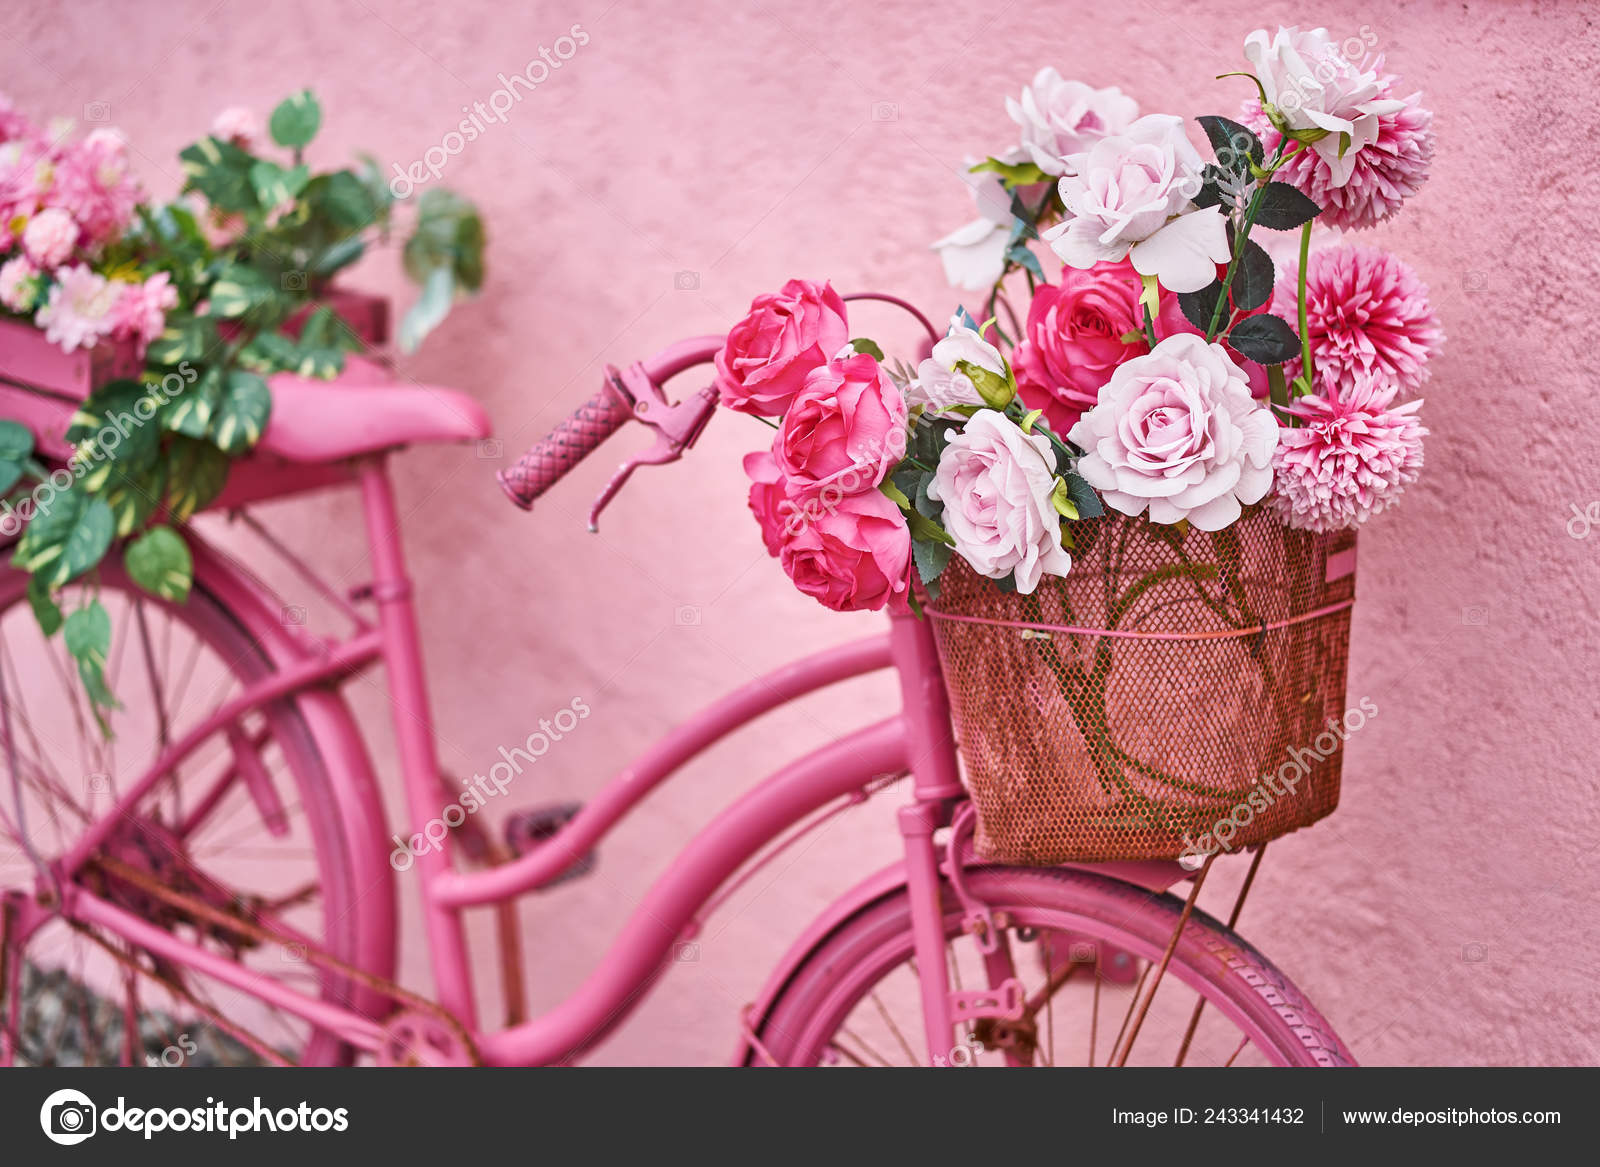 pink bike basket